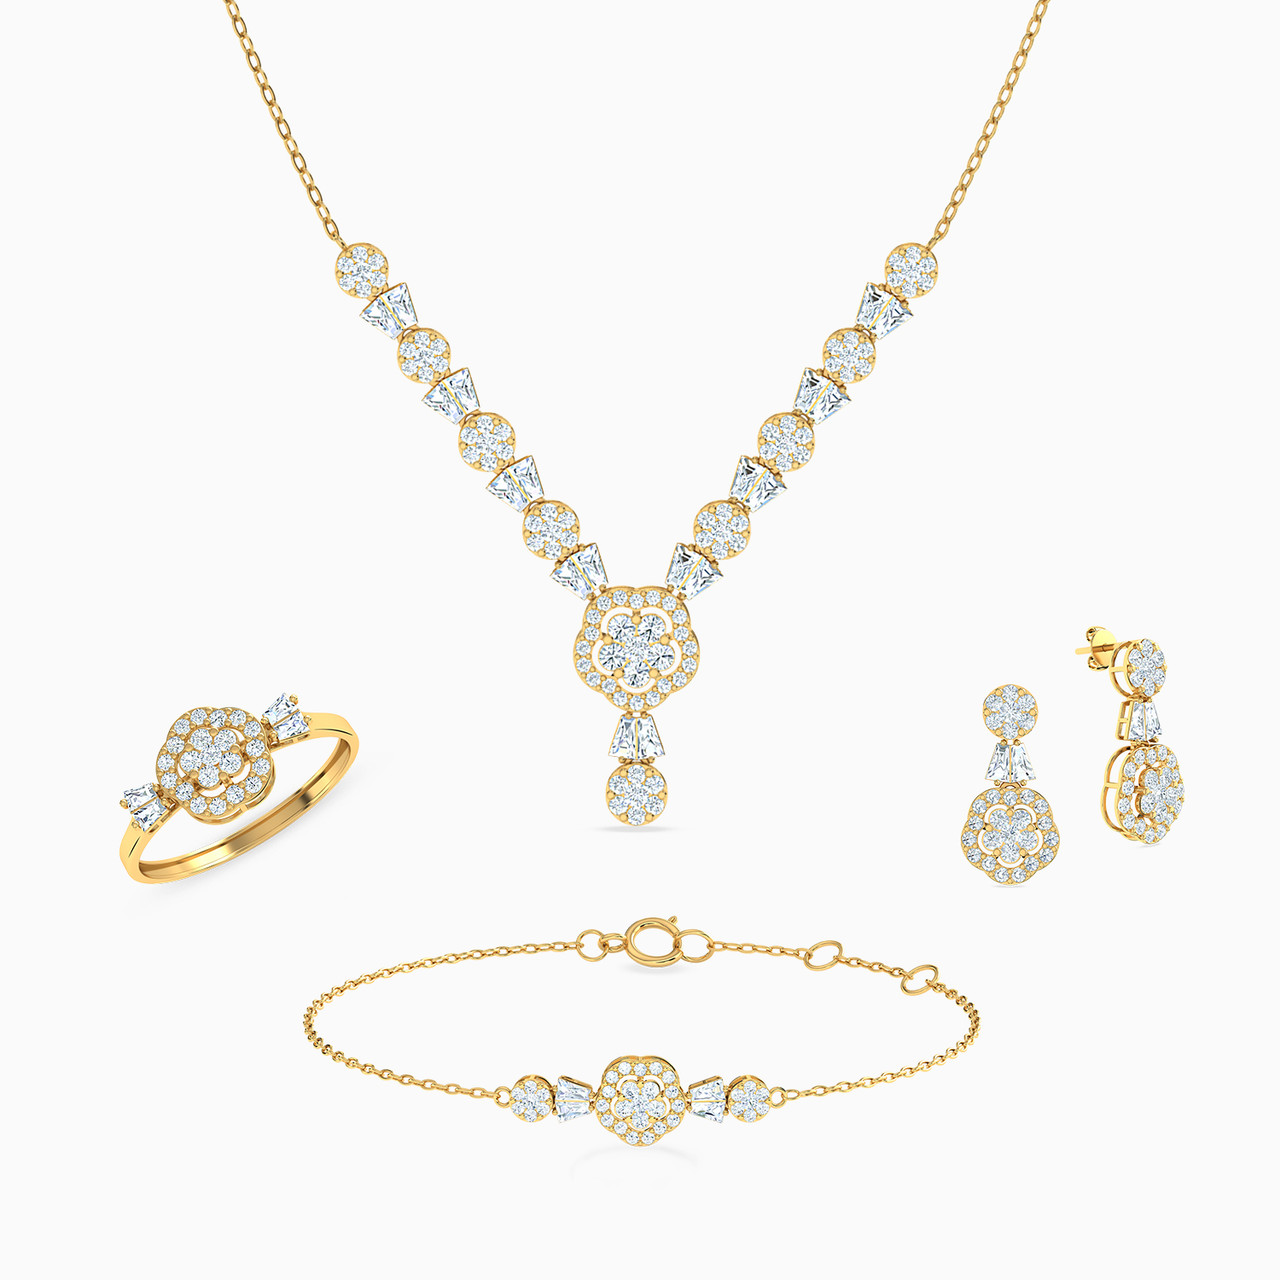 18K Gold Cubic Zirconia Jewelry Set -4 Pieces